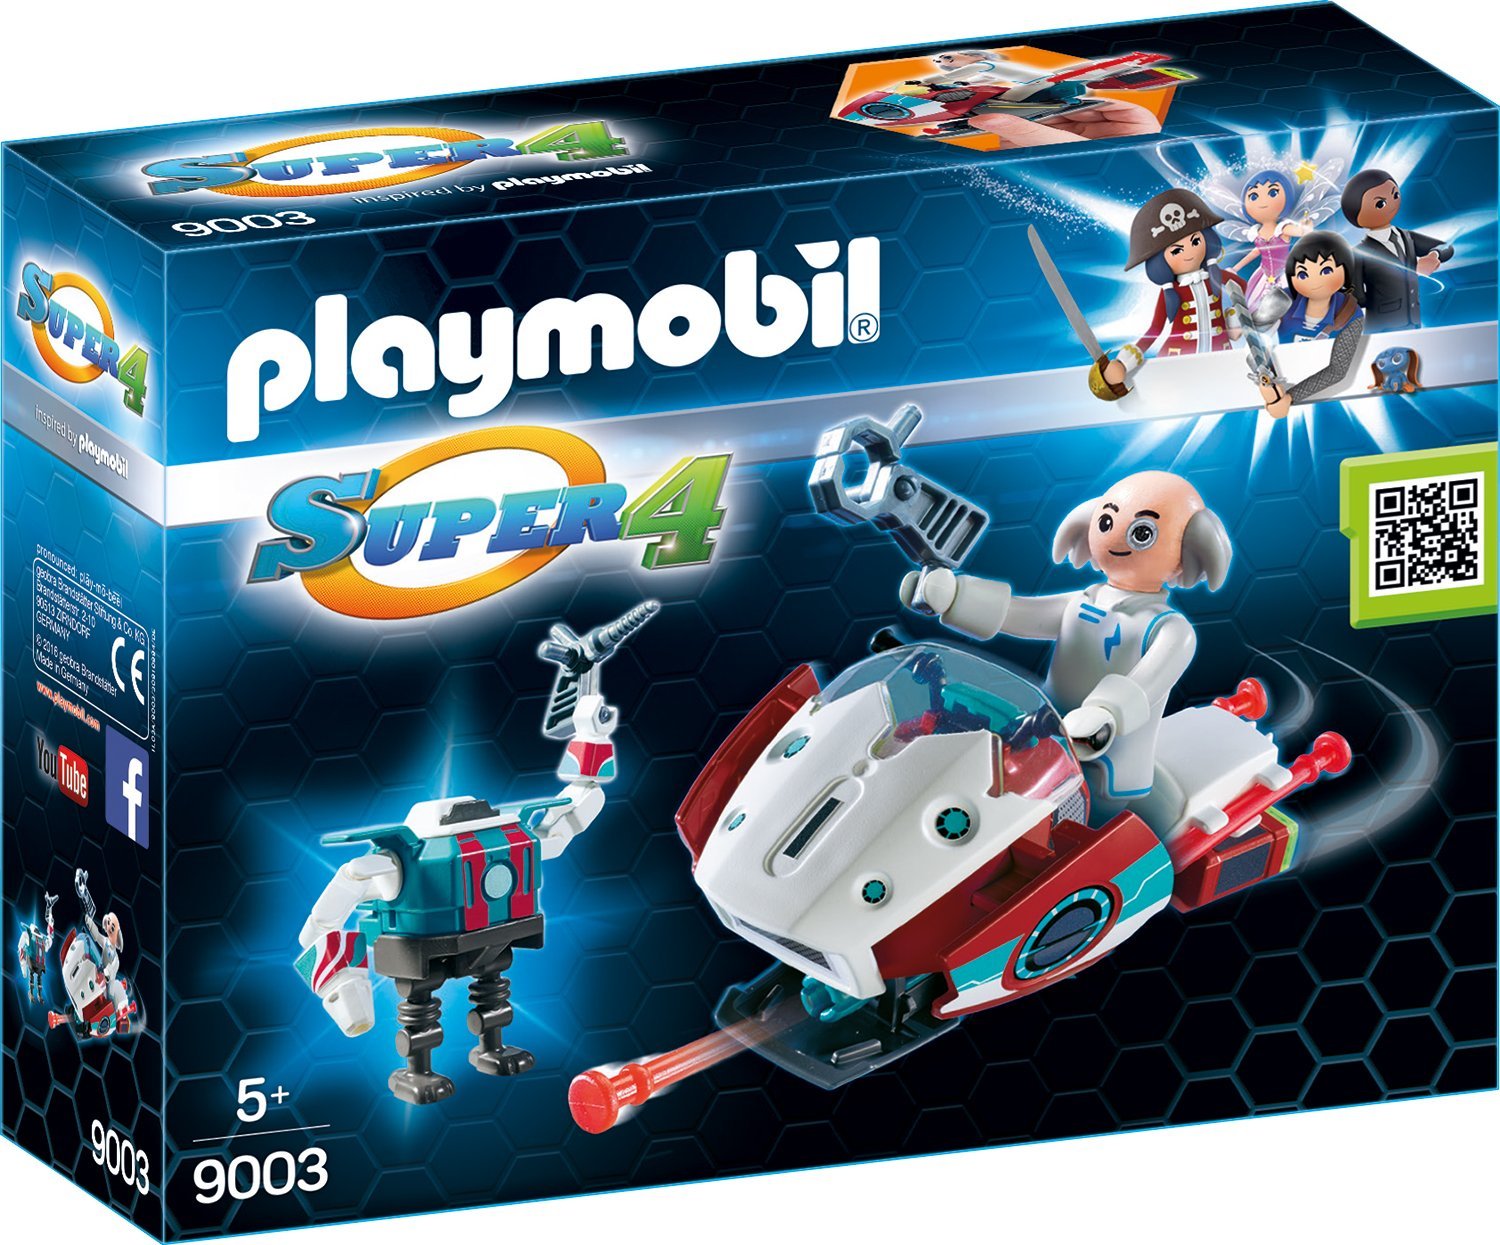 Playmobil 9003 - Skyjet mit Dr X und Roboter (Super4)